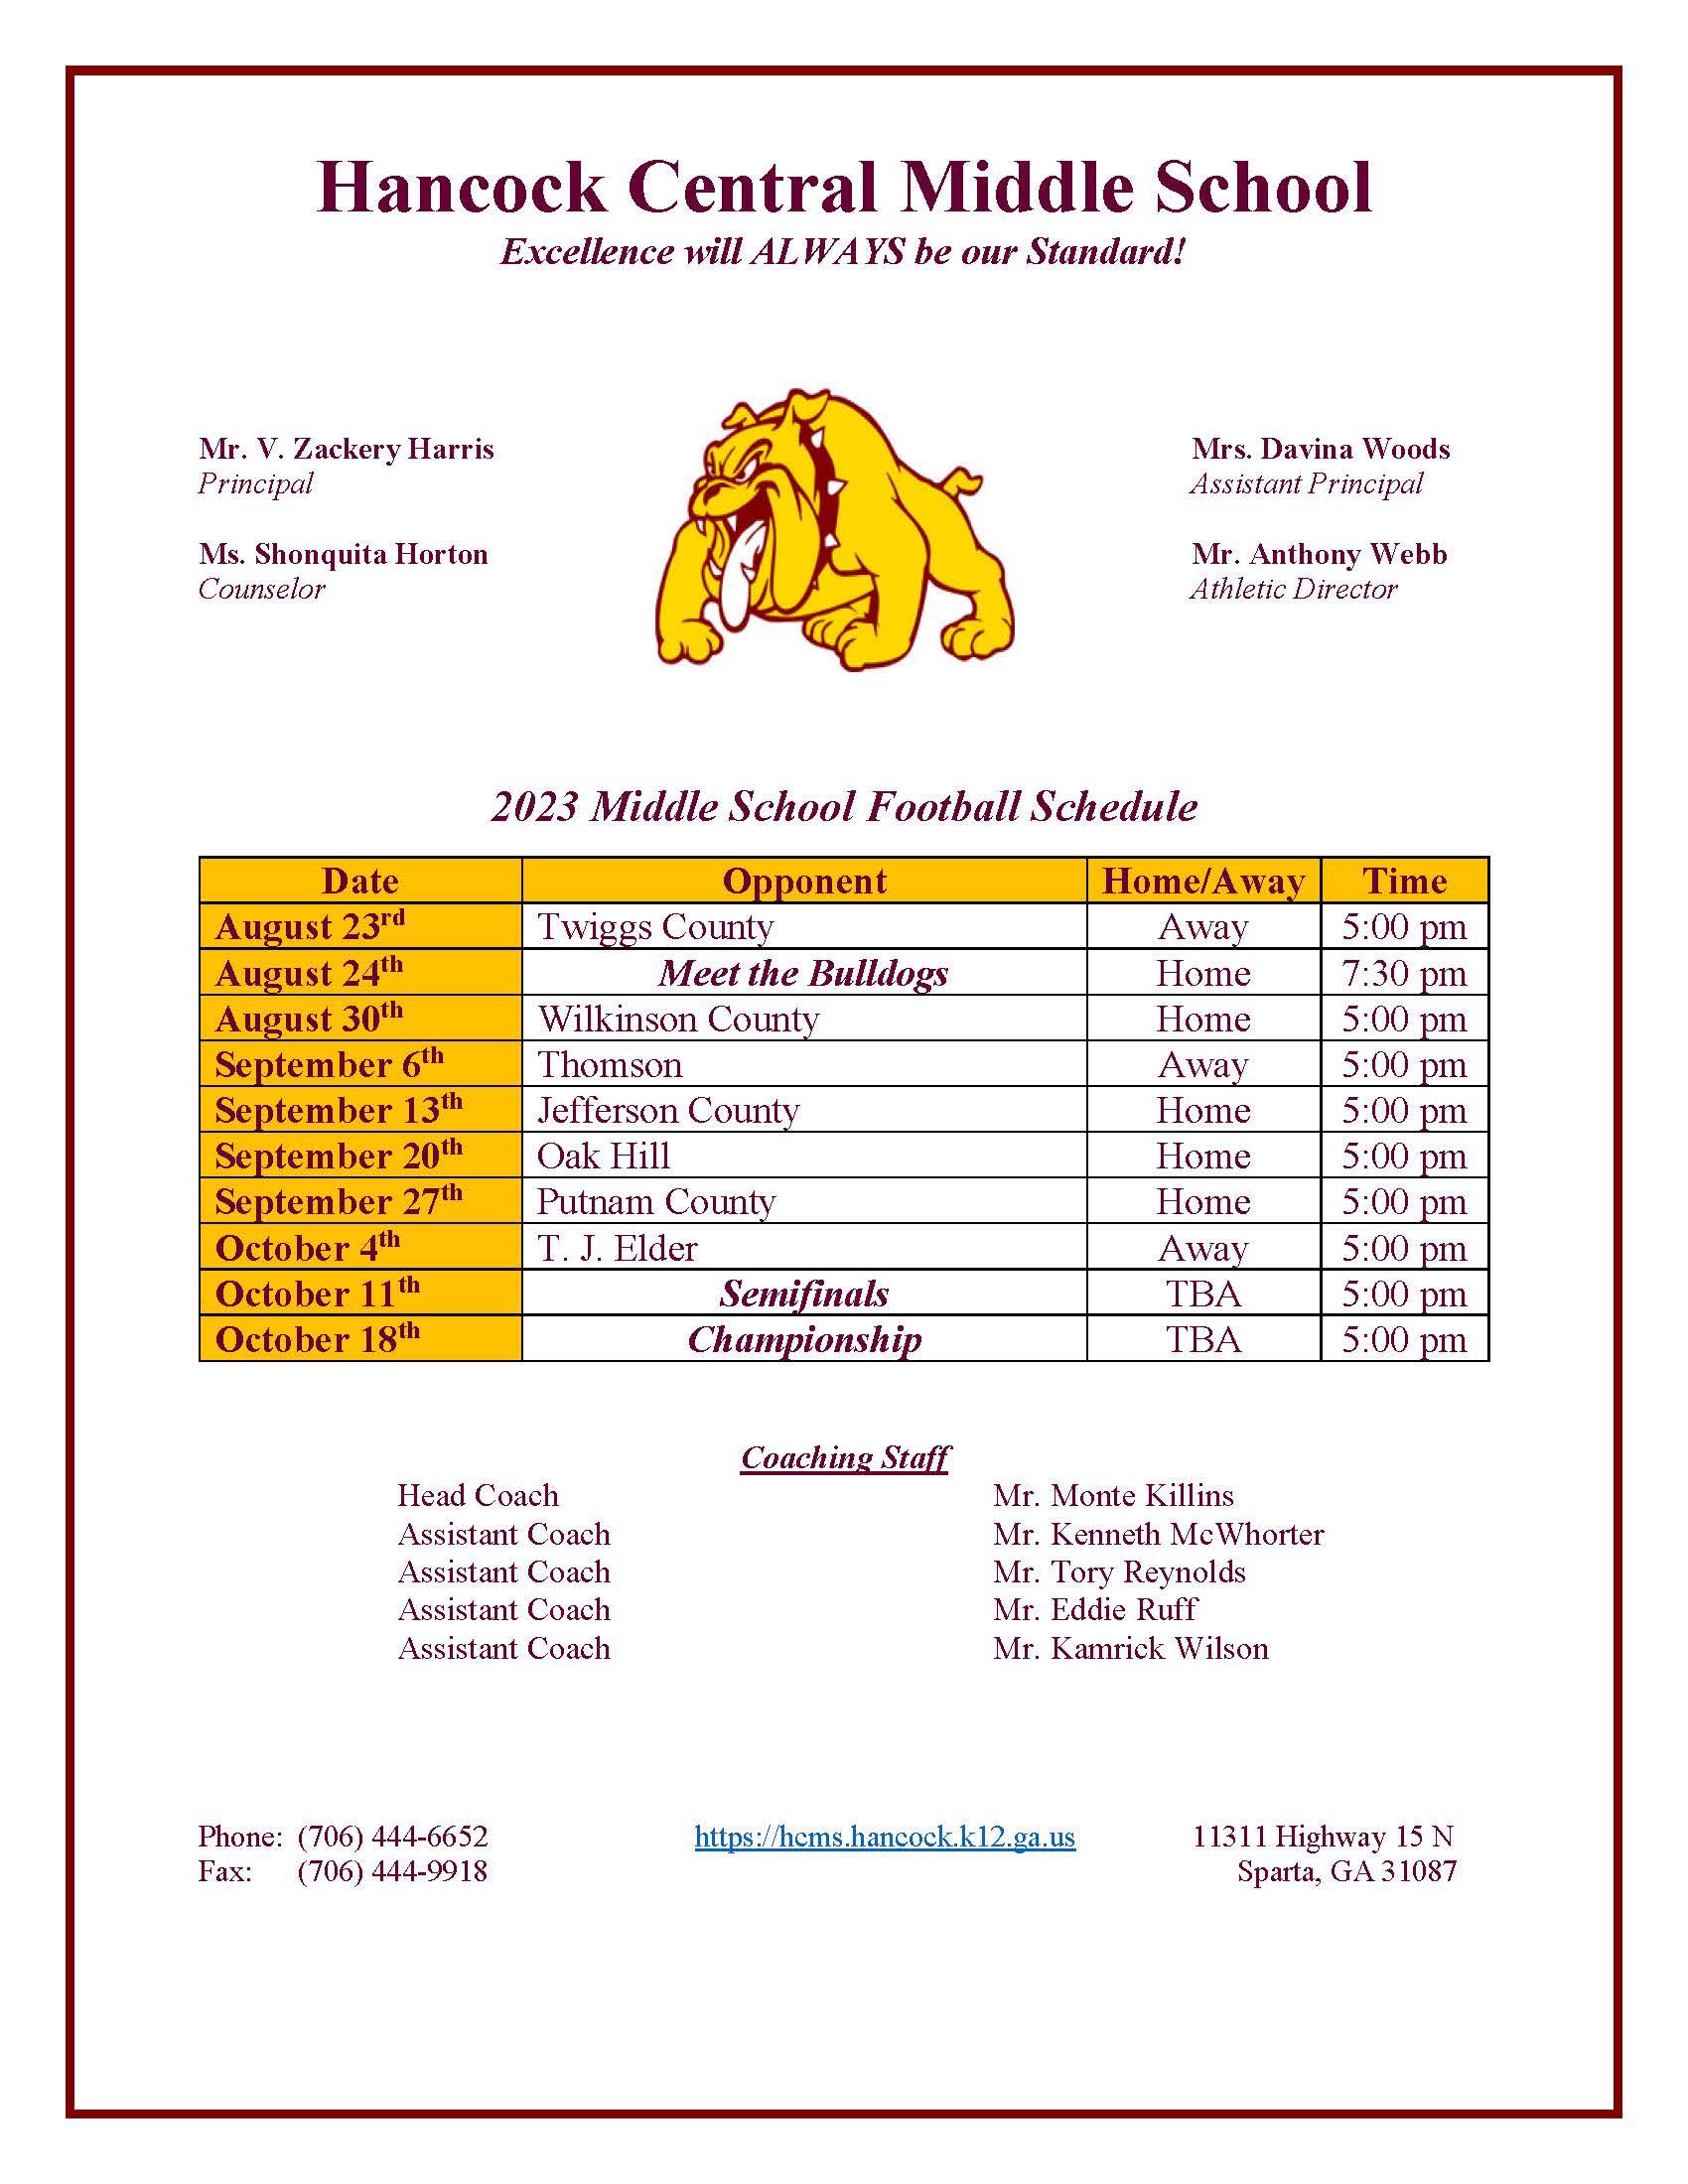 Middle School Football Schedule 2023